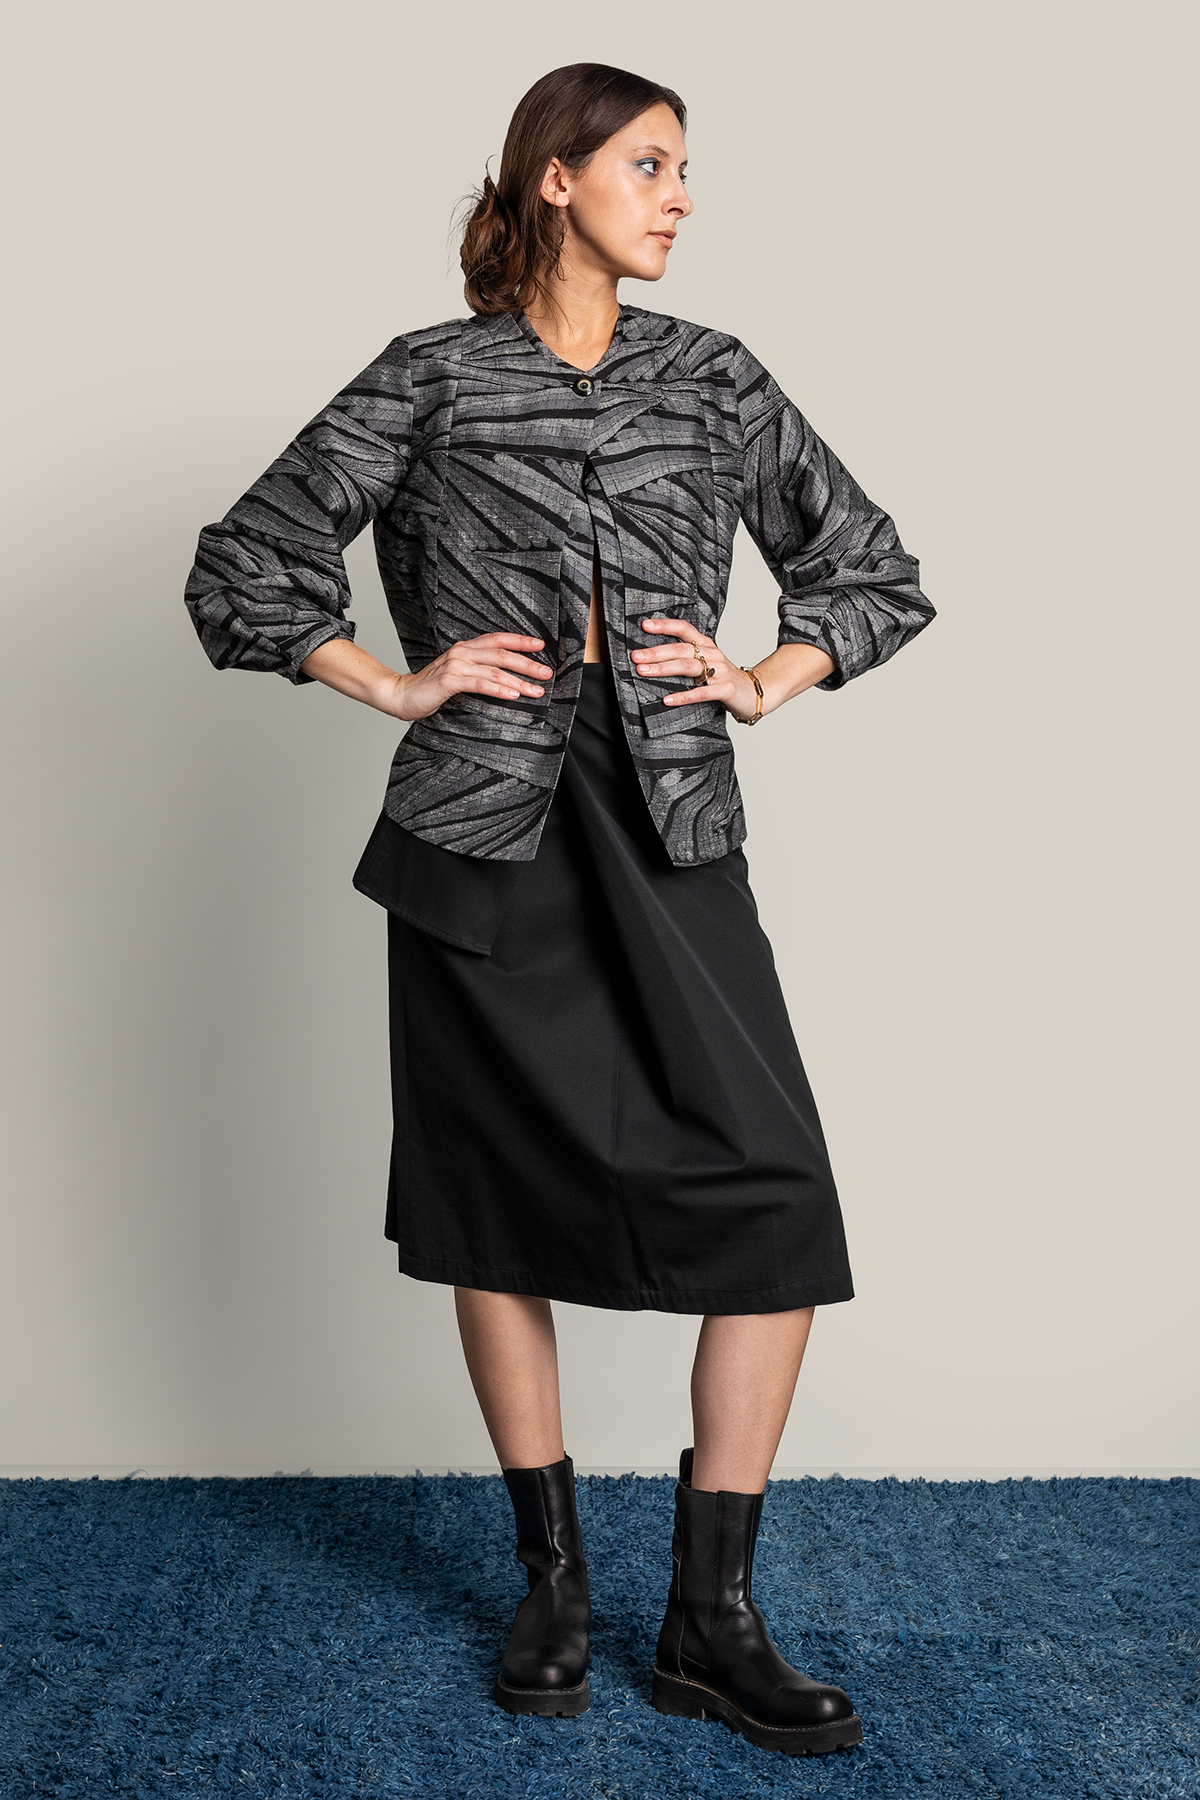 Peplum Skirt in Black Heavy Cotton